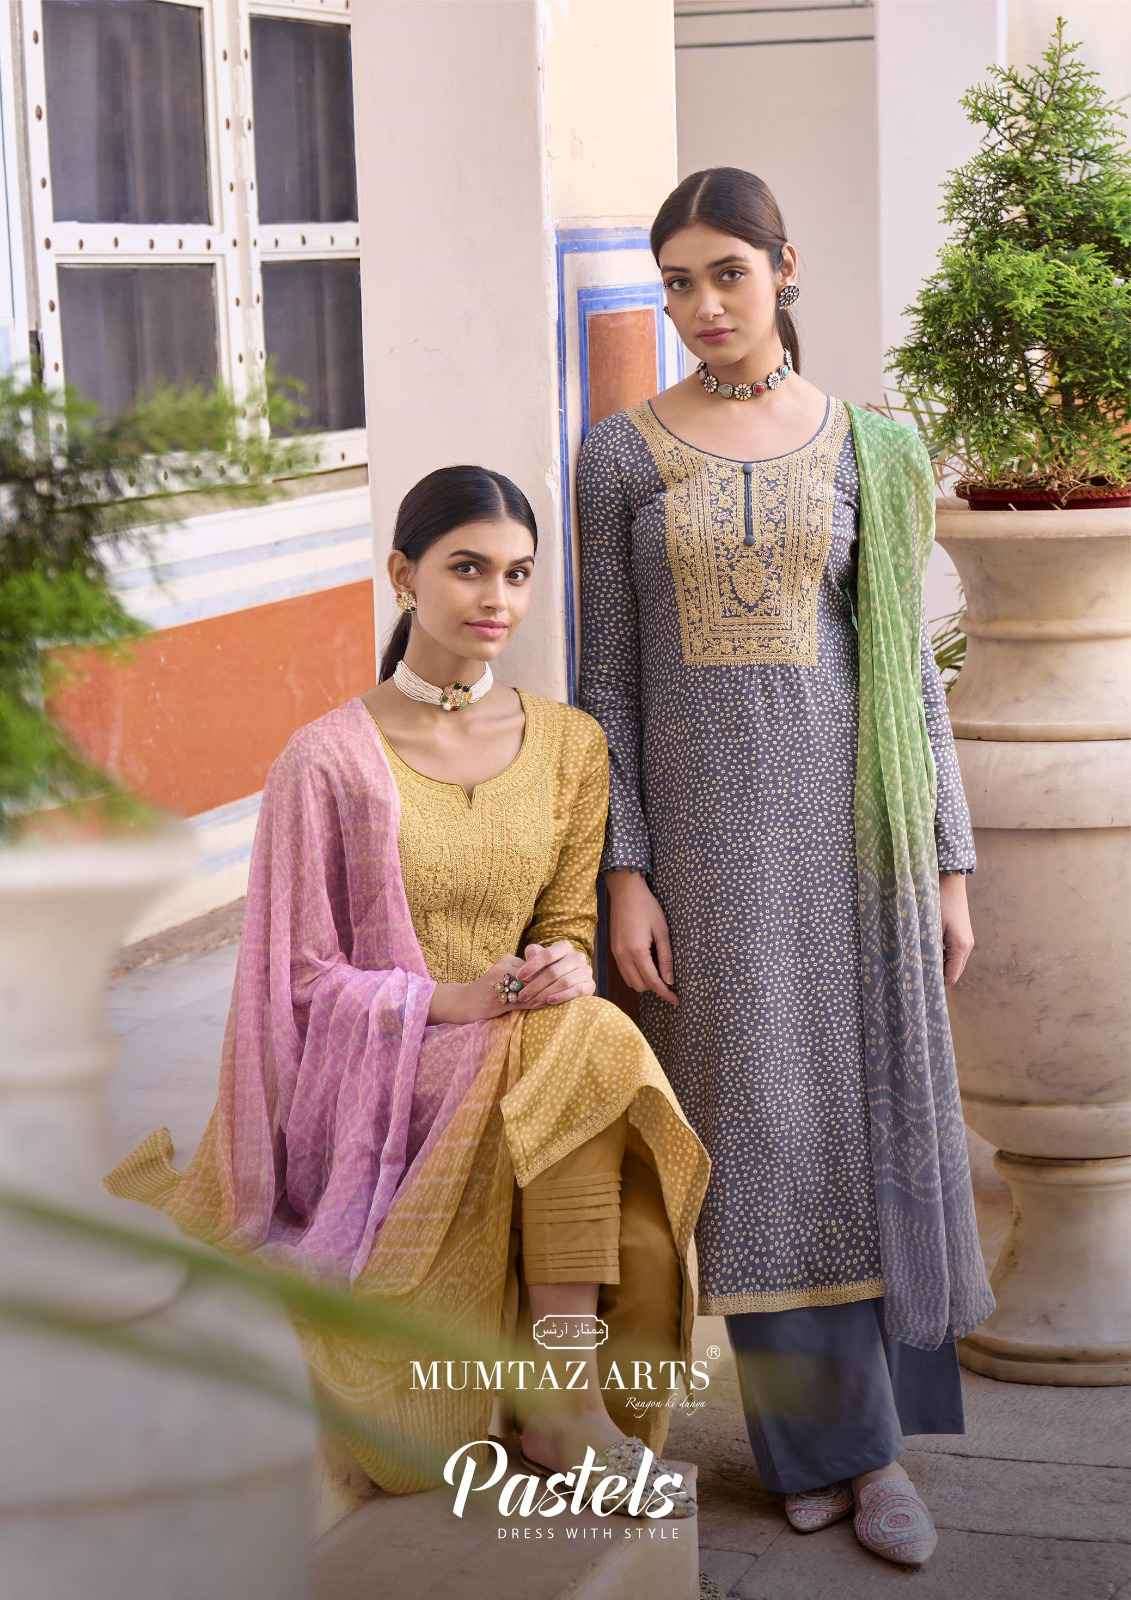 Mumtaz Arts Pastels New Designs Satin Ladies Salwar Suit Suppliers